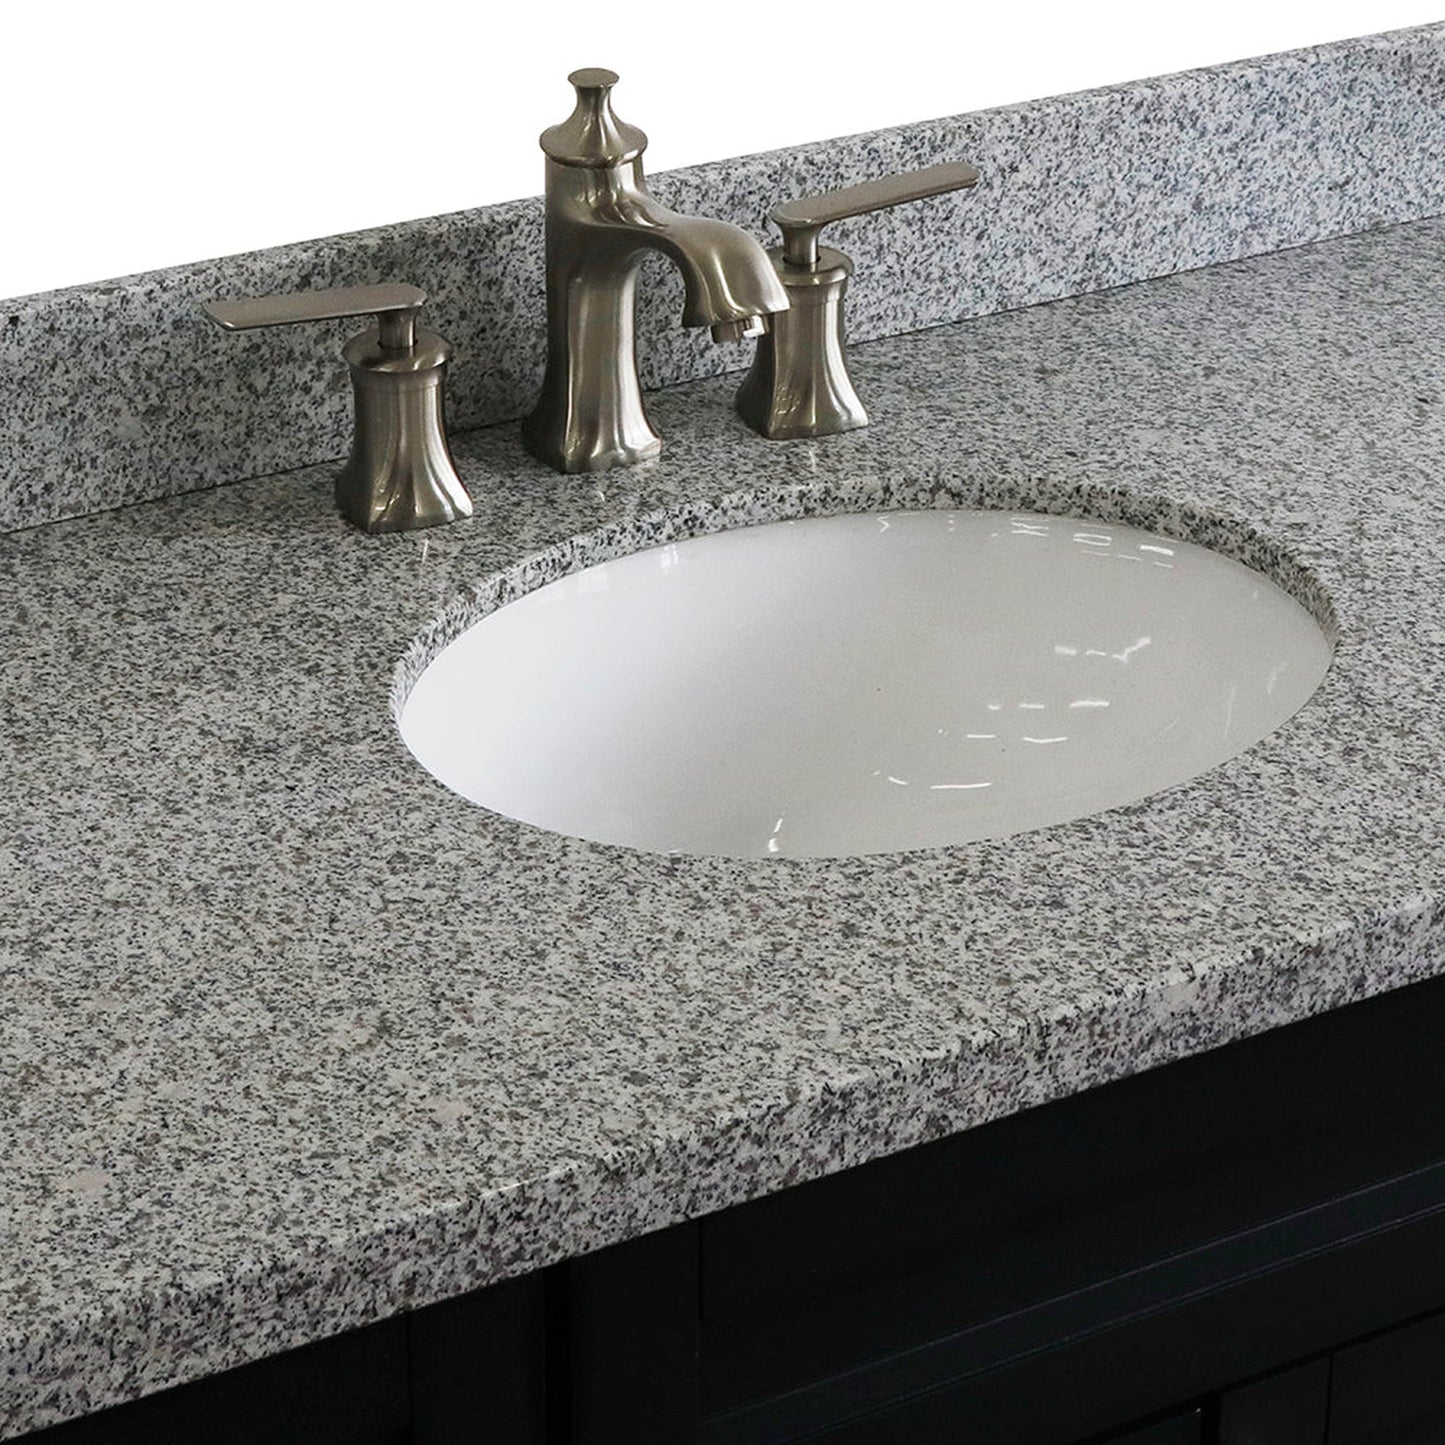 Bellaterra Home Terni 49" 2-Door 6-Drawer Dark Gray Freestanding Vanity Set With Ceramic Undermount Oval Sink and Gray Granite Top